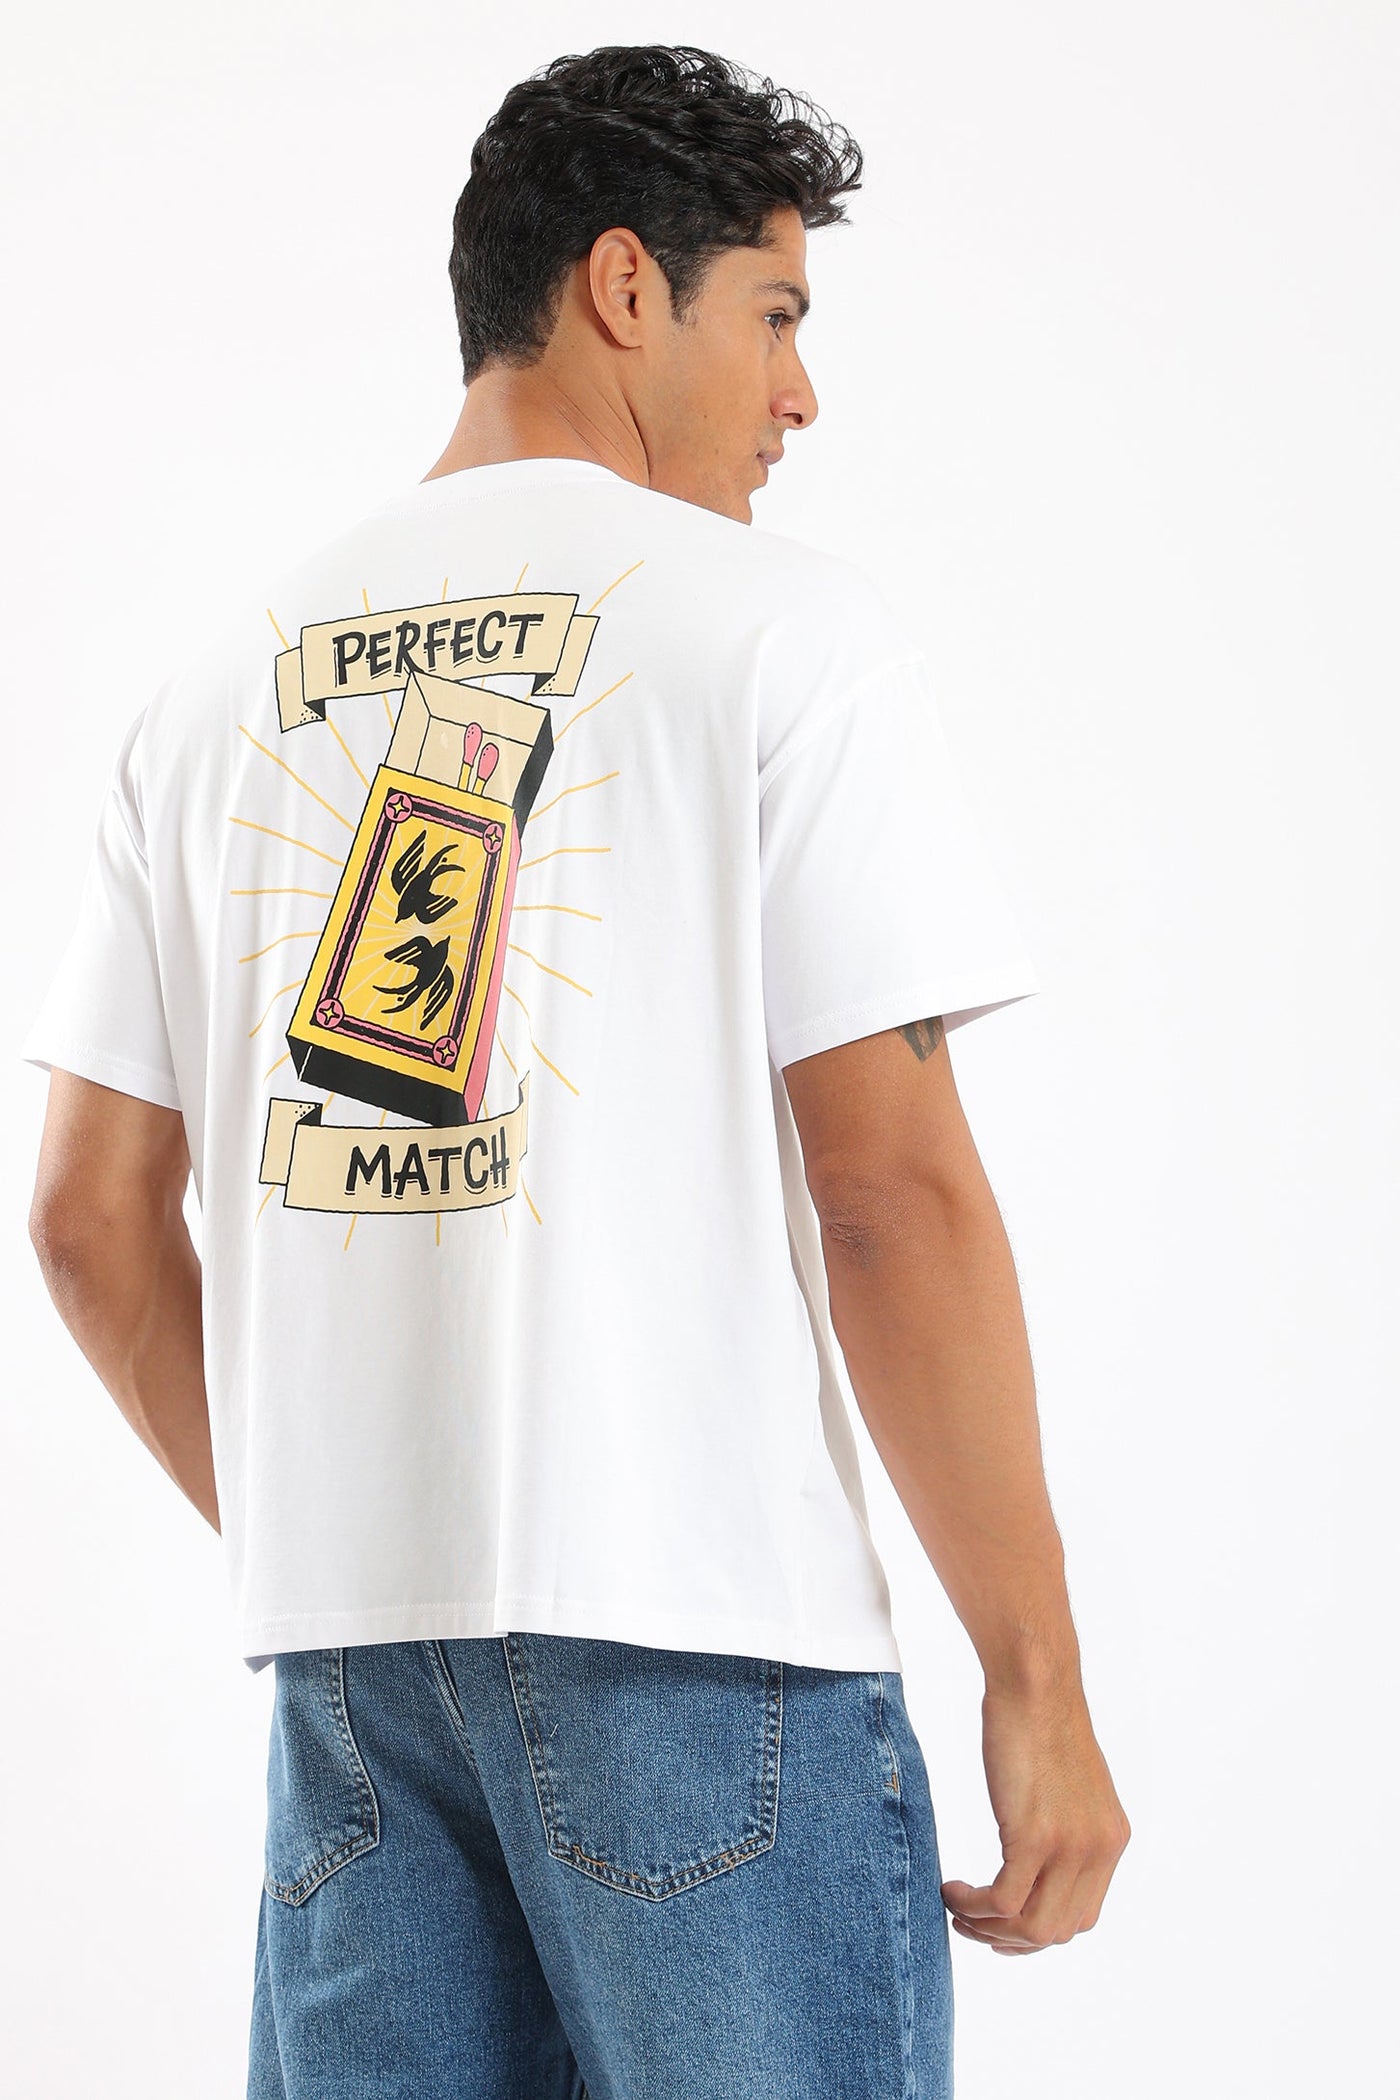 Unisex T-Shirt - Oversized - "Perfect Match" Back Print